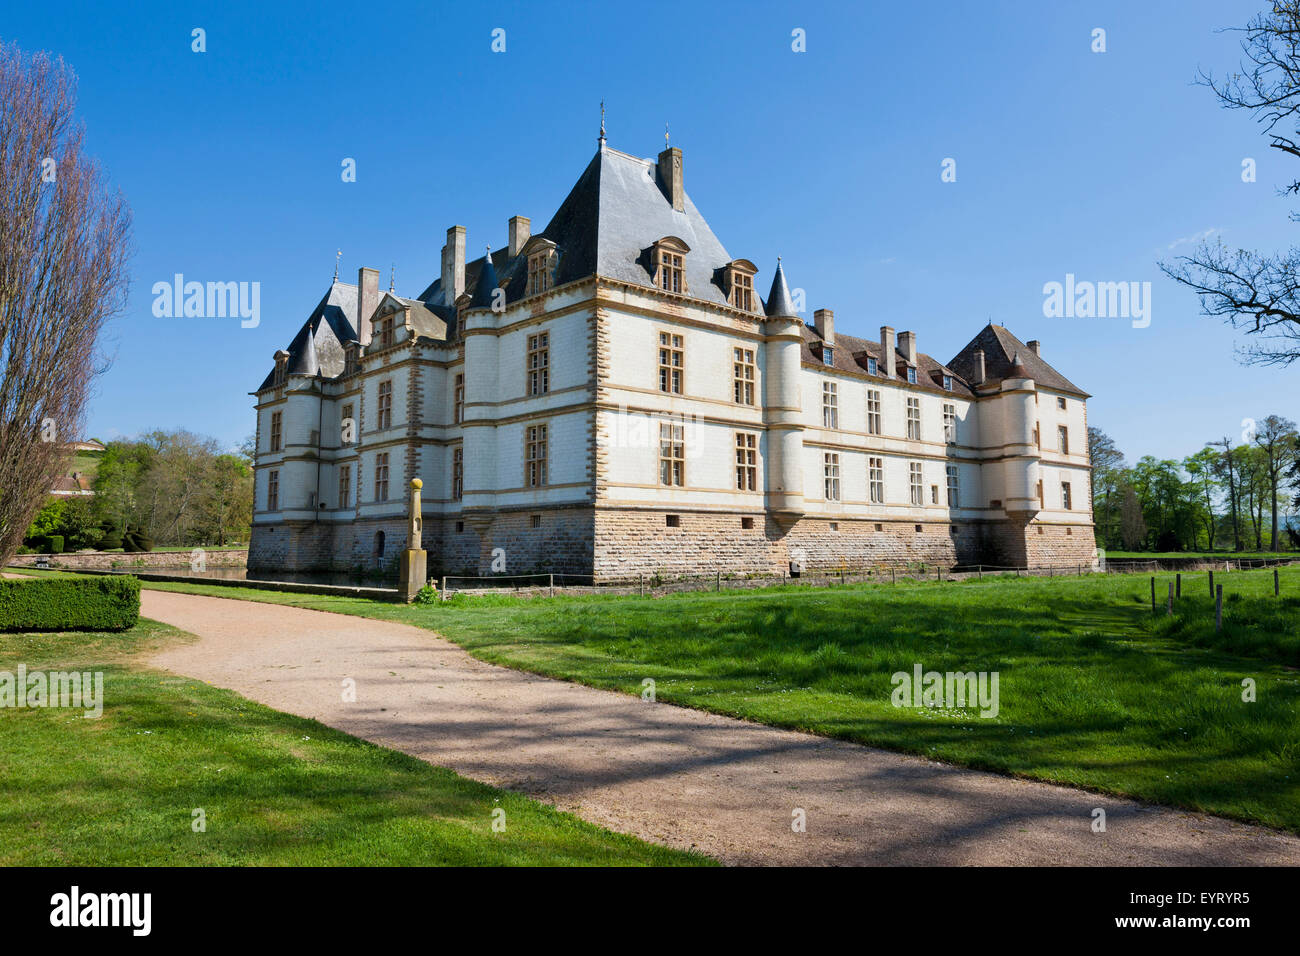 Château de Cormatin, north west view, France, Stock Photo